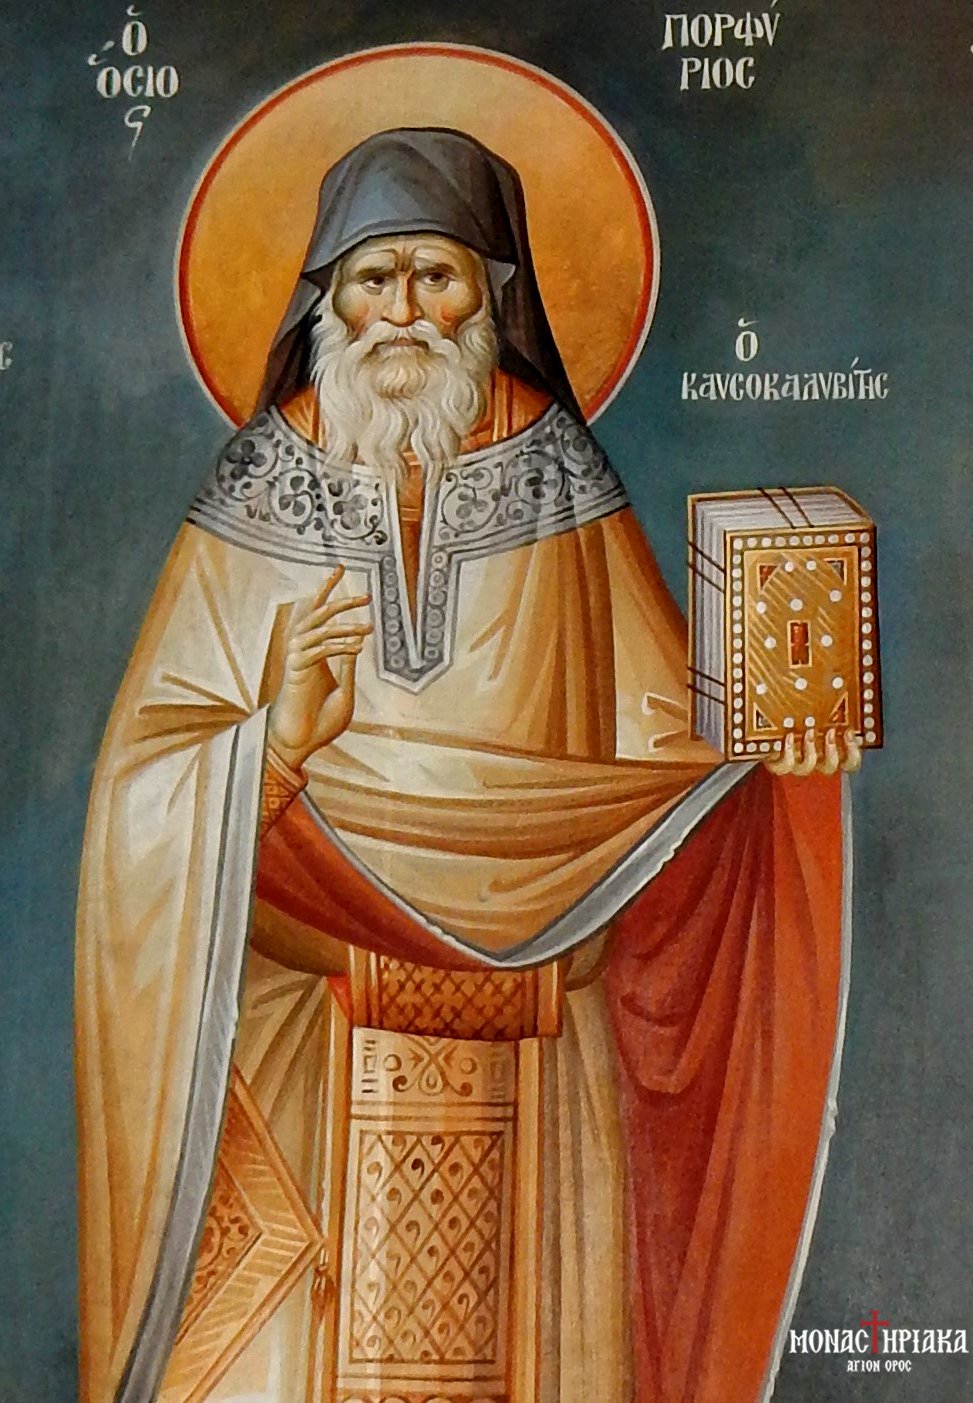 Saint Porphyrios the Kausokalivite 